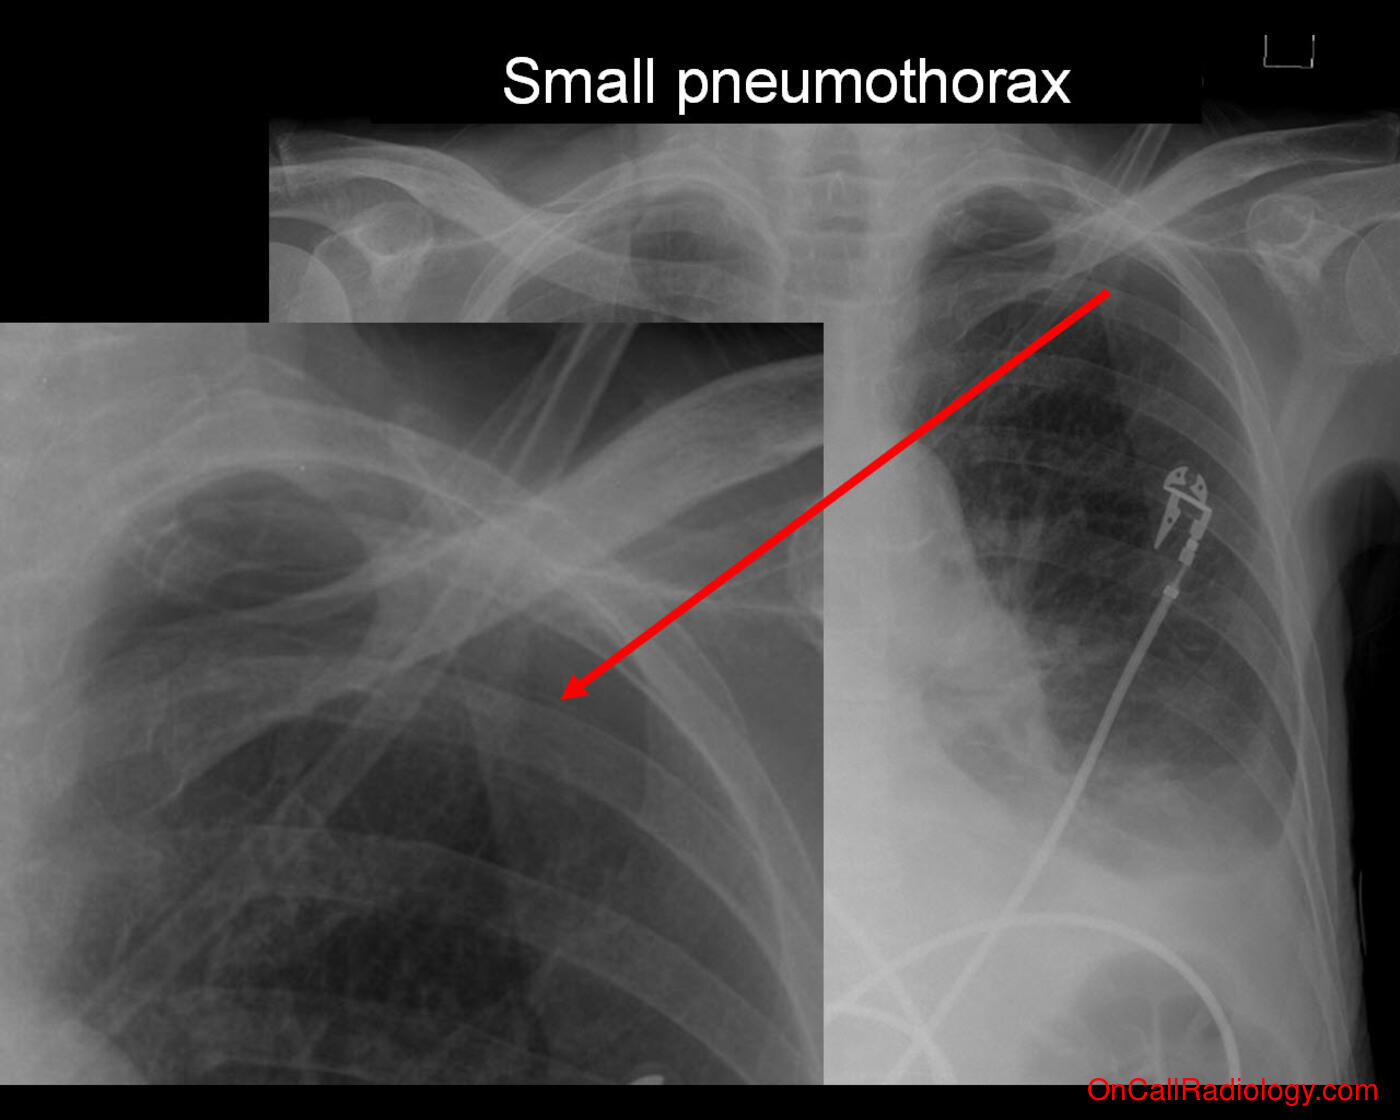 Pneumothorax (Small pneumothorax - Plain film, Radiograph)